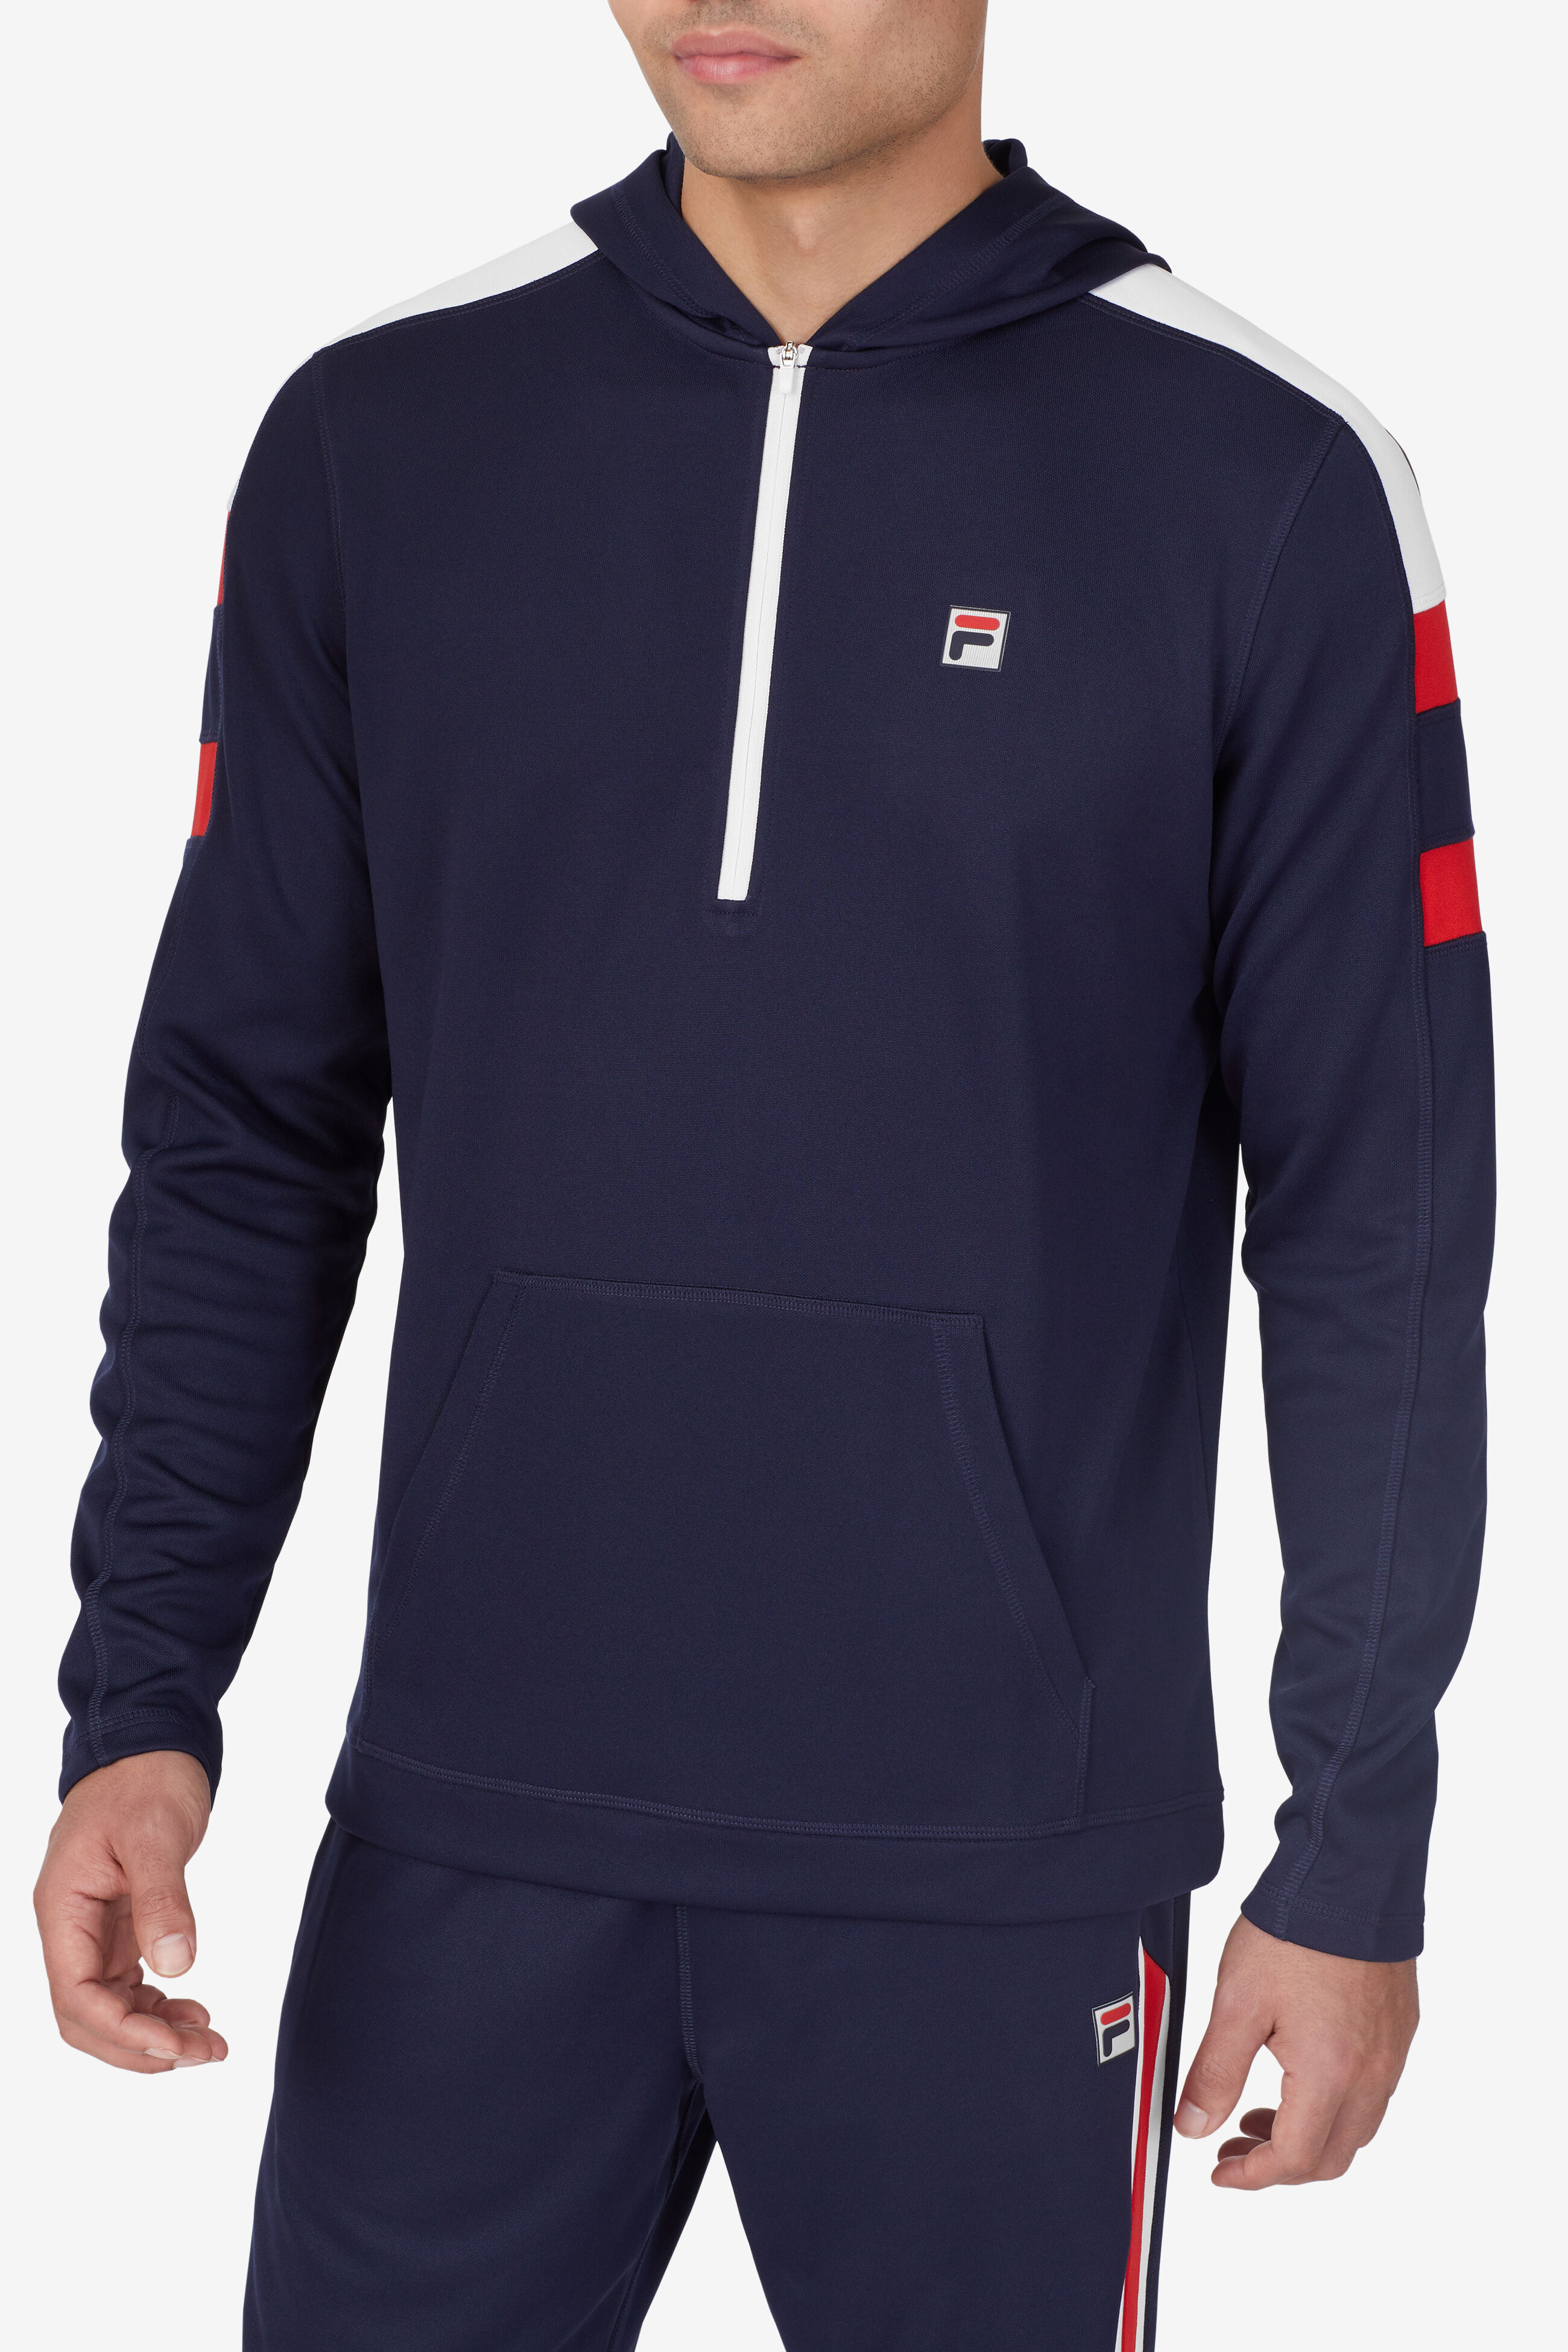 FILA FILA Sport Sweatshirt Grey 1/4 Zip Mens XL 